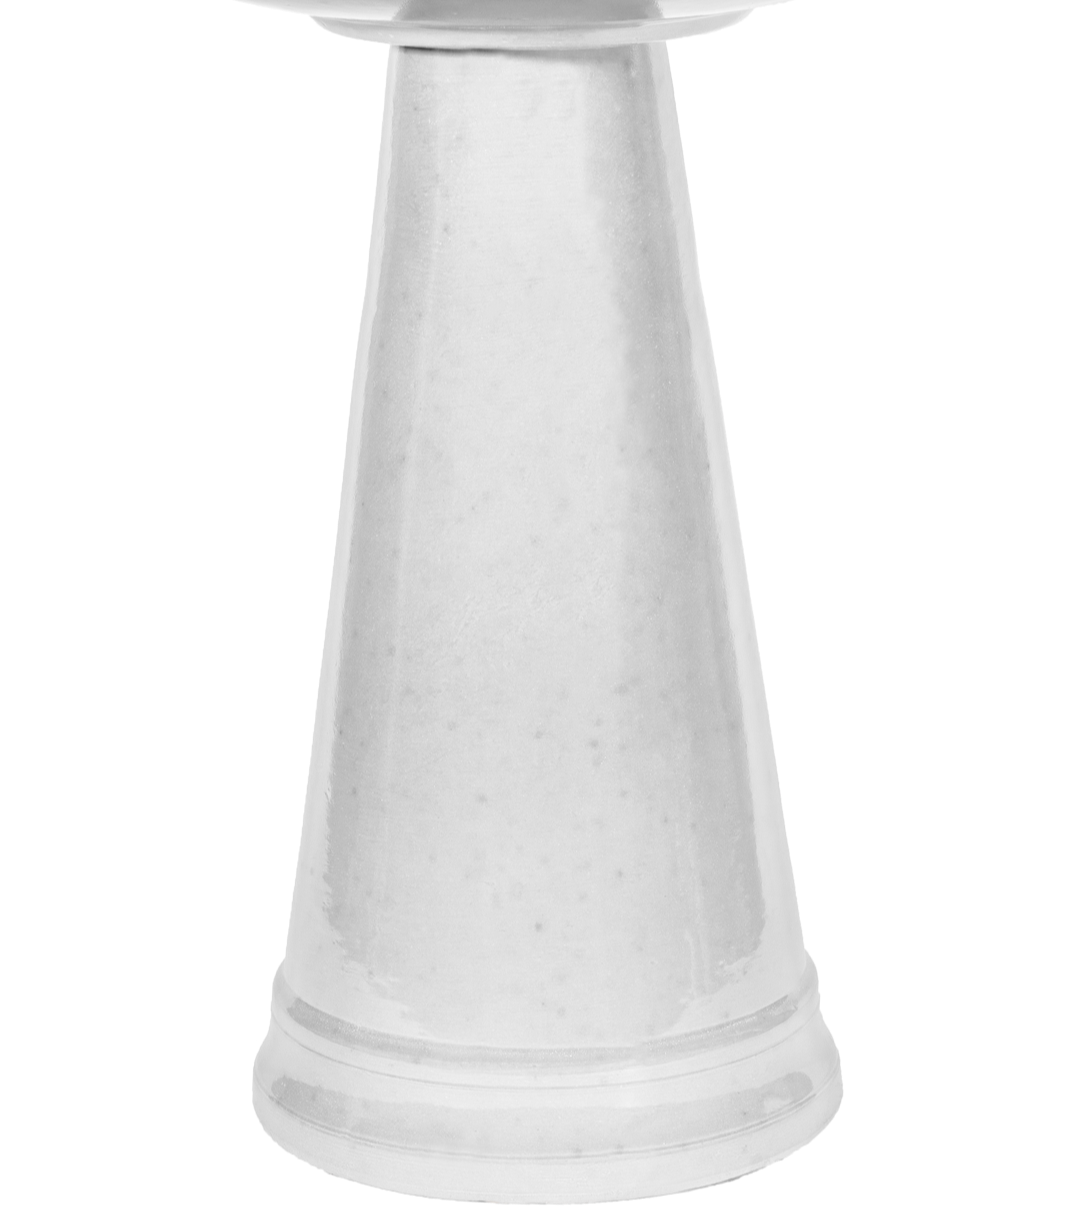 ceramic white birdbath pedestal with a simple clean modern design